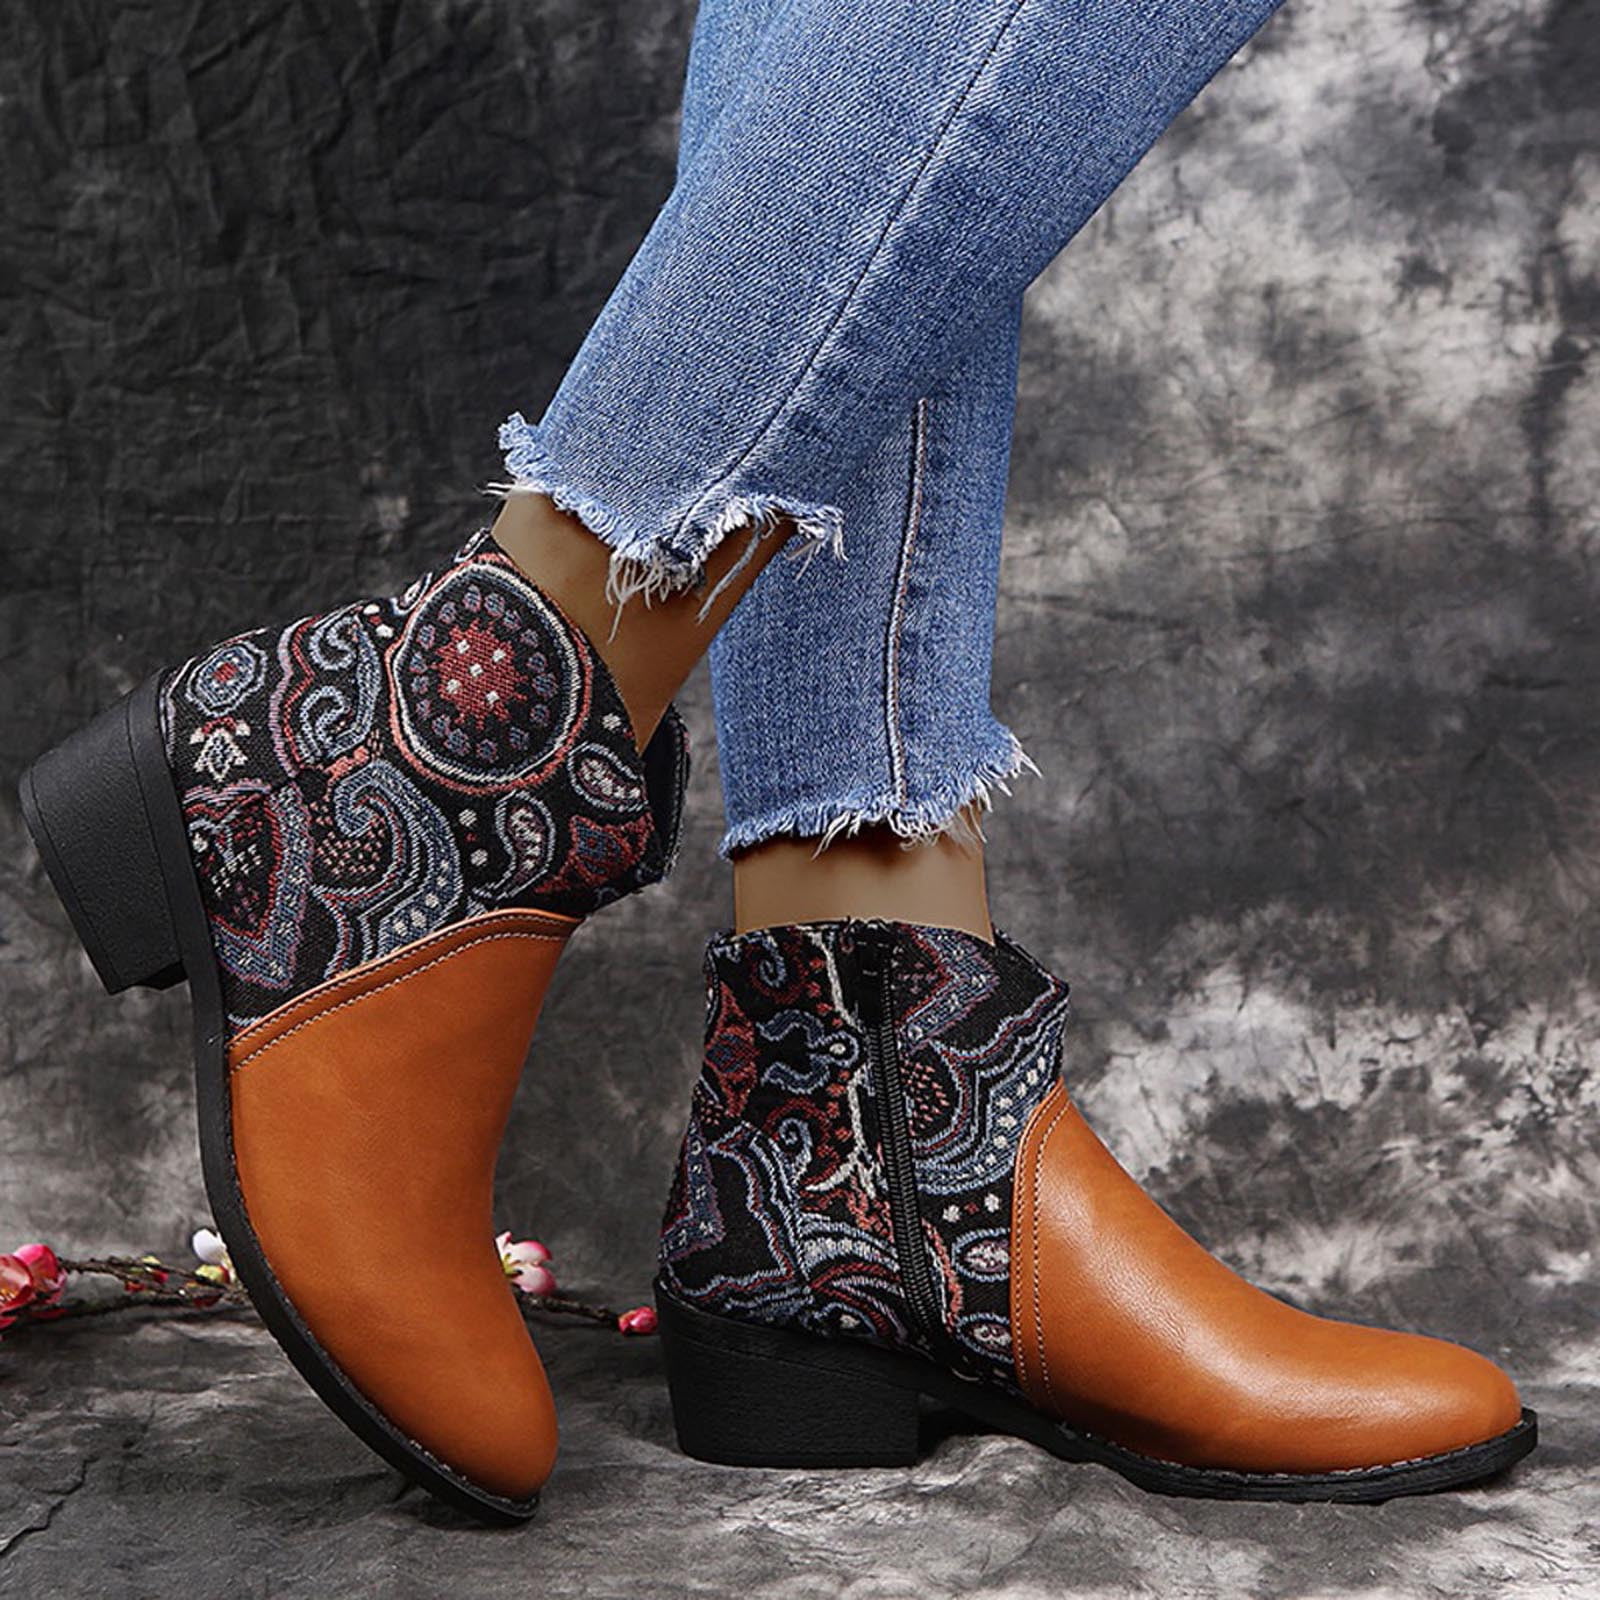 ✨SALE✨ ZARA BLOCK HEEL LEATHER ANKLE BOOTS ✨SALE✨ | Black heels low, Zara ankle  boots, Leather ankle boots